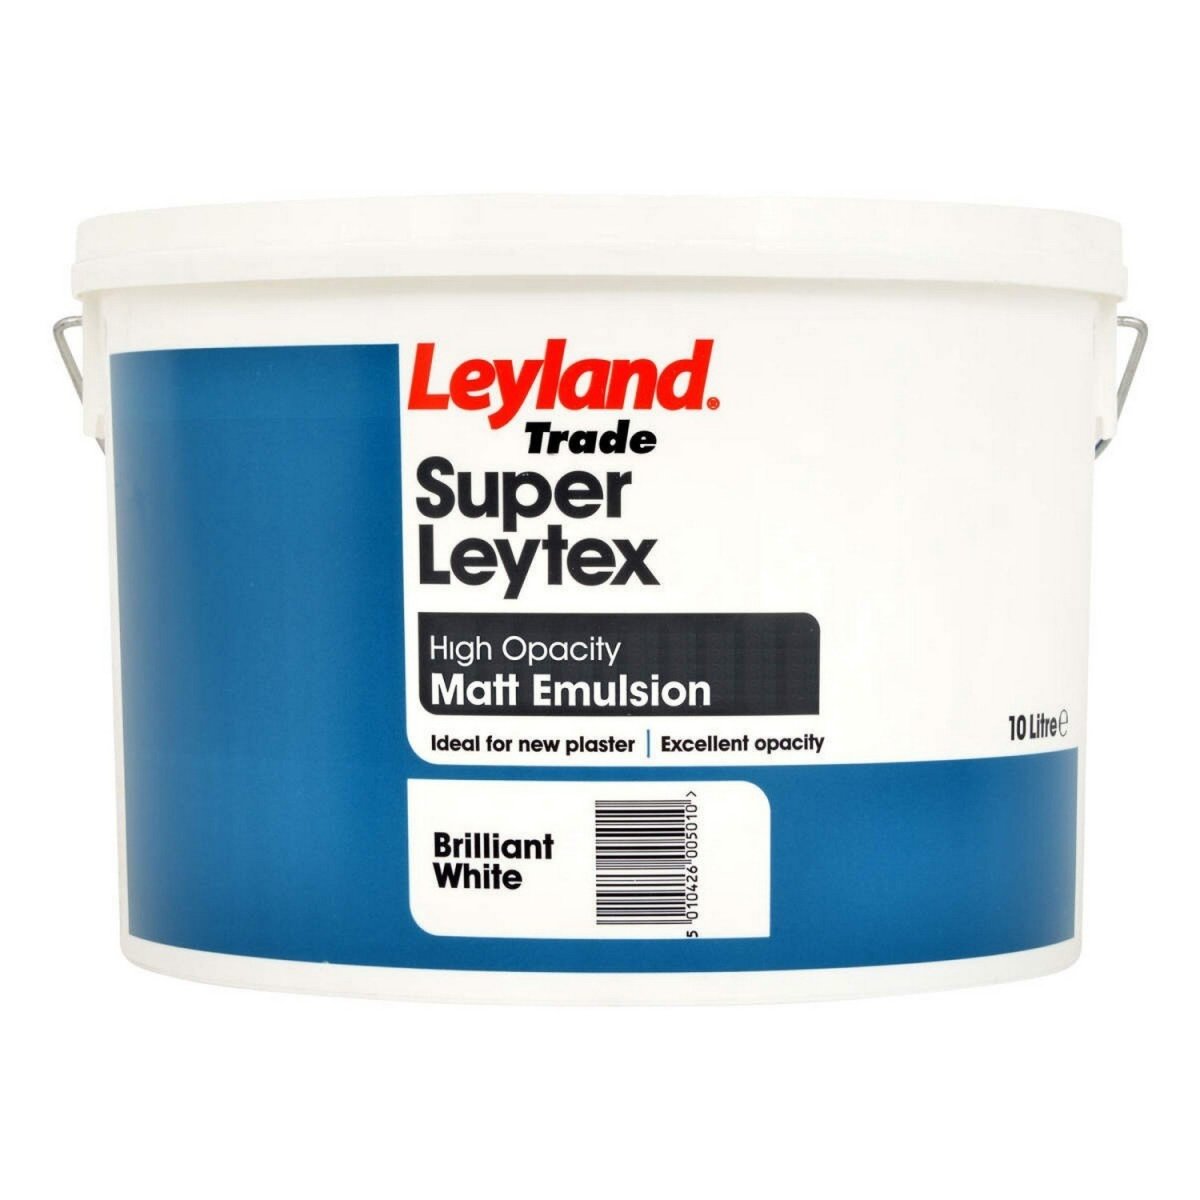 Brilliant White Trade Super Leytex Matt Emulsion, 10L - Bonnypack